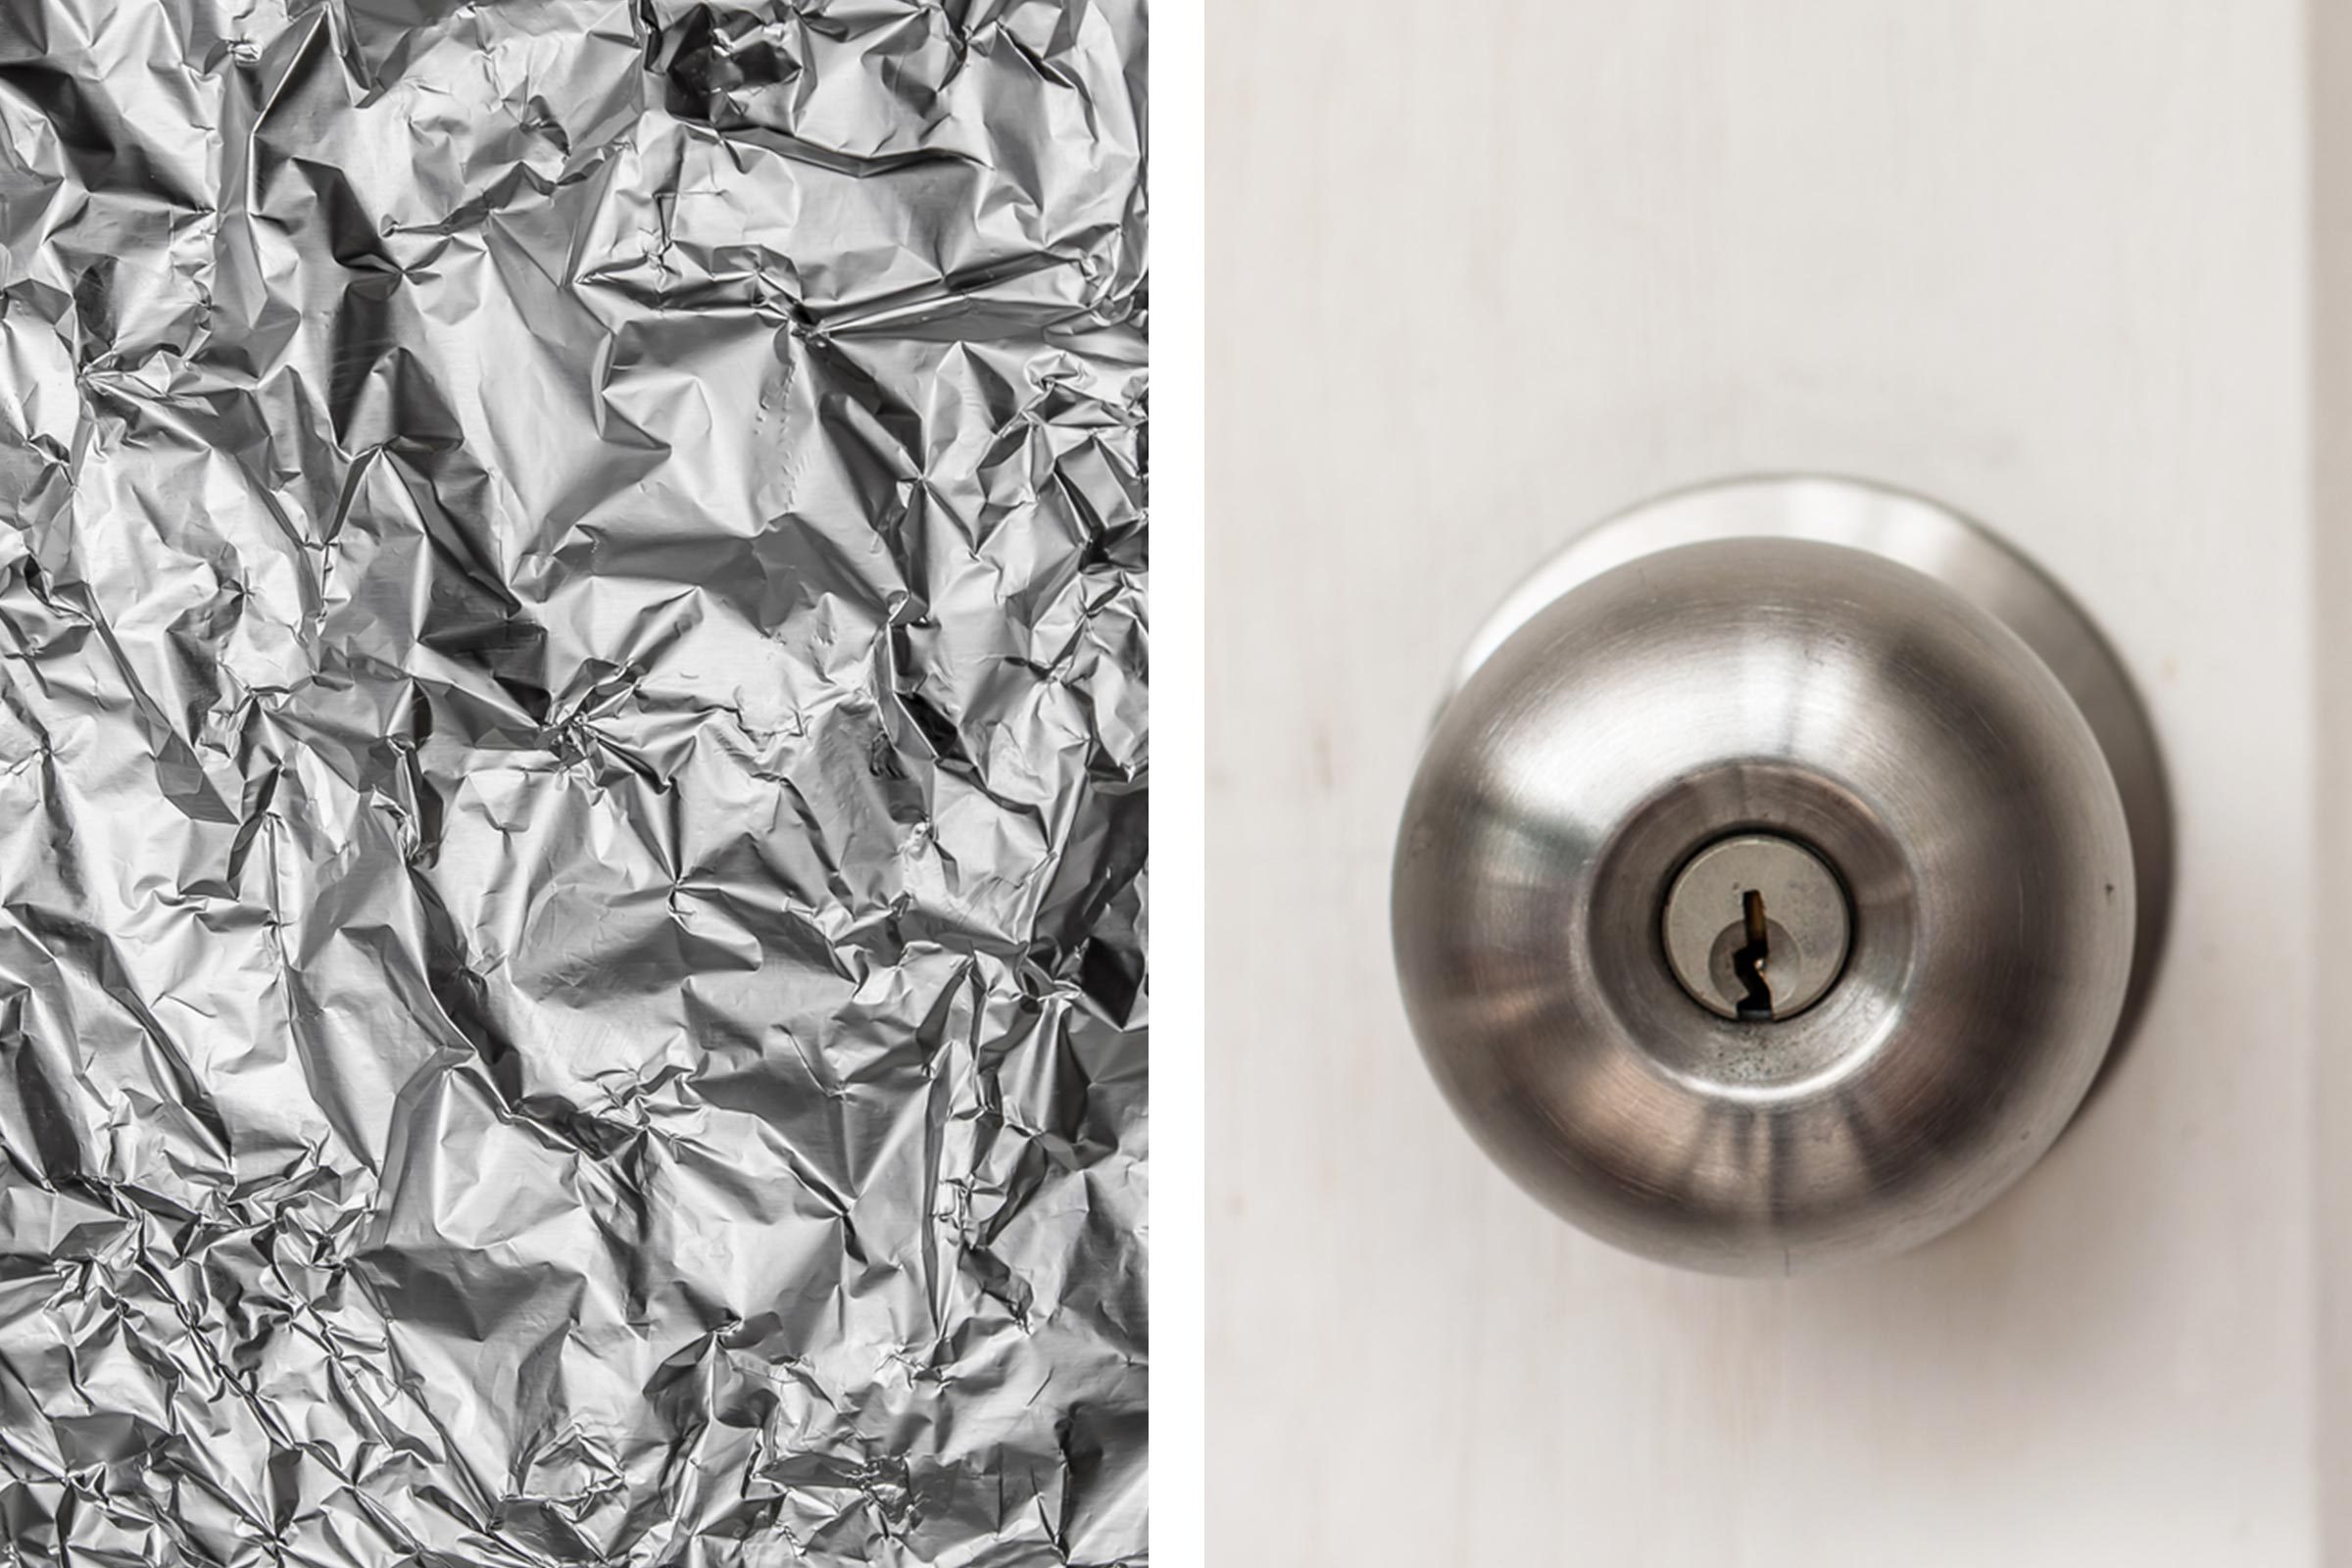 What You Should Know About Aluminum Foil